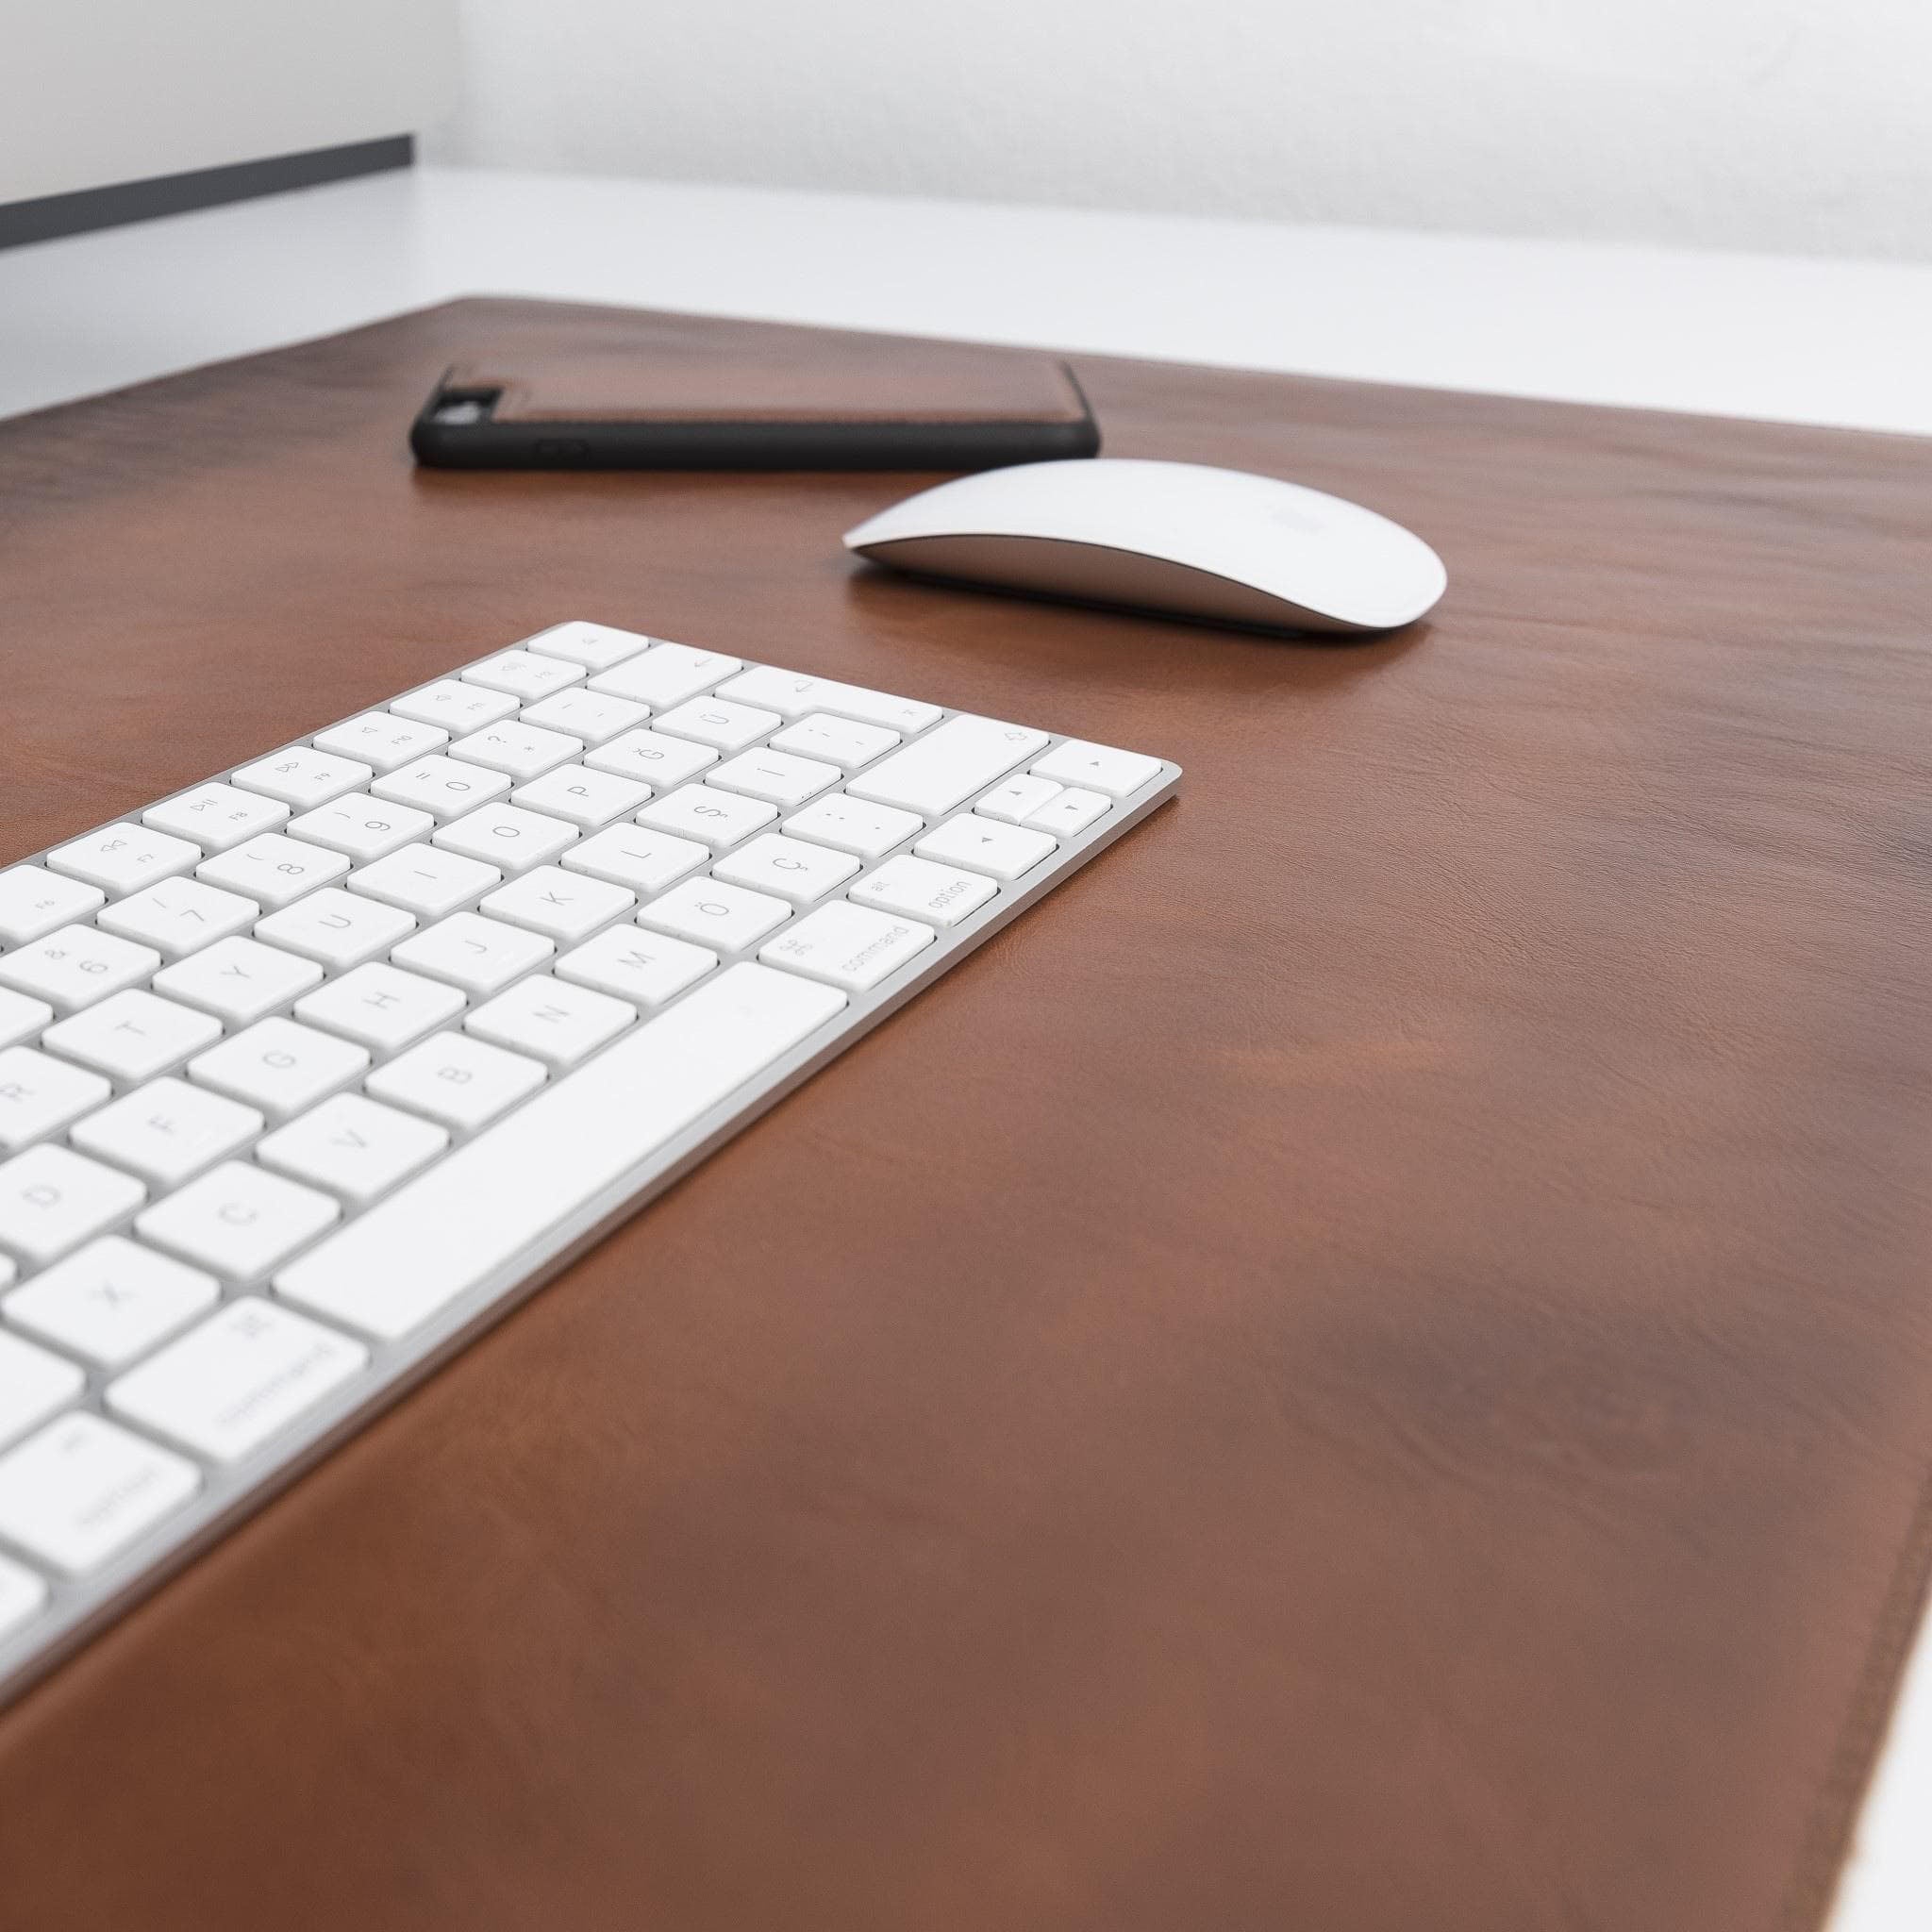 DelfiCase Leather Deskmat, Office Desk Pad